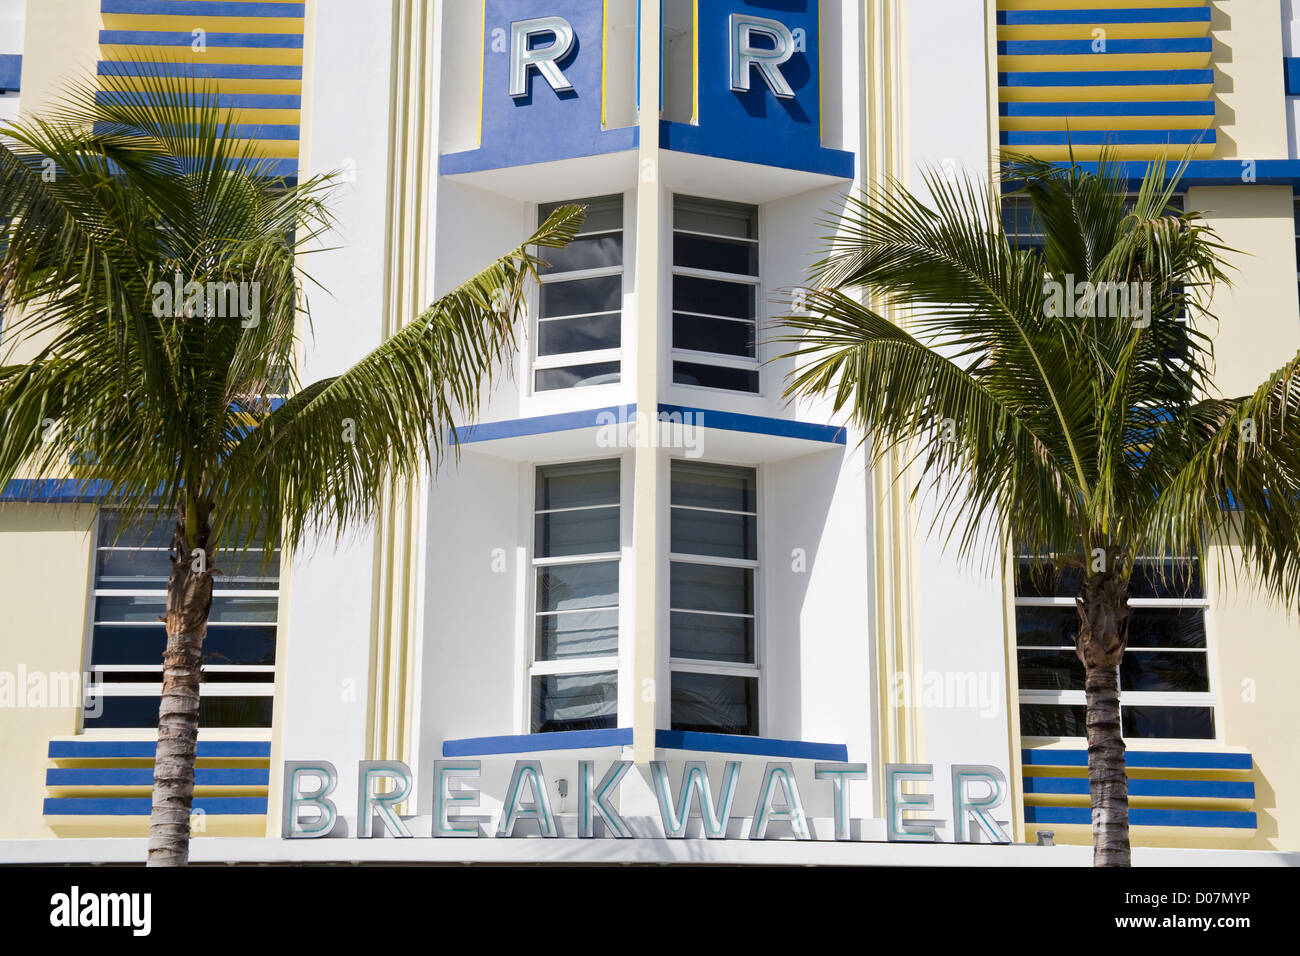 Breakwater Hotel on Ocean Drive, South Beach, City of Miami Beach, Florida, USA Stock Photo